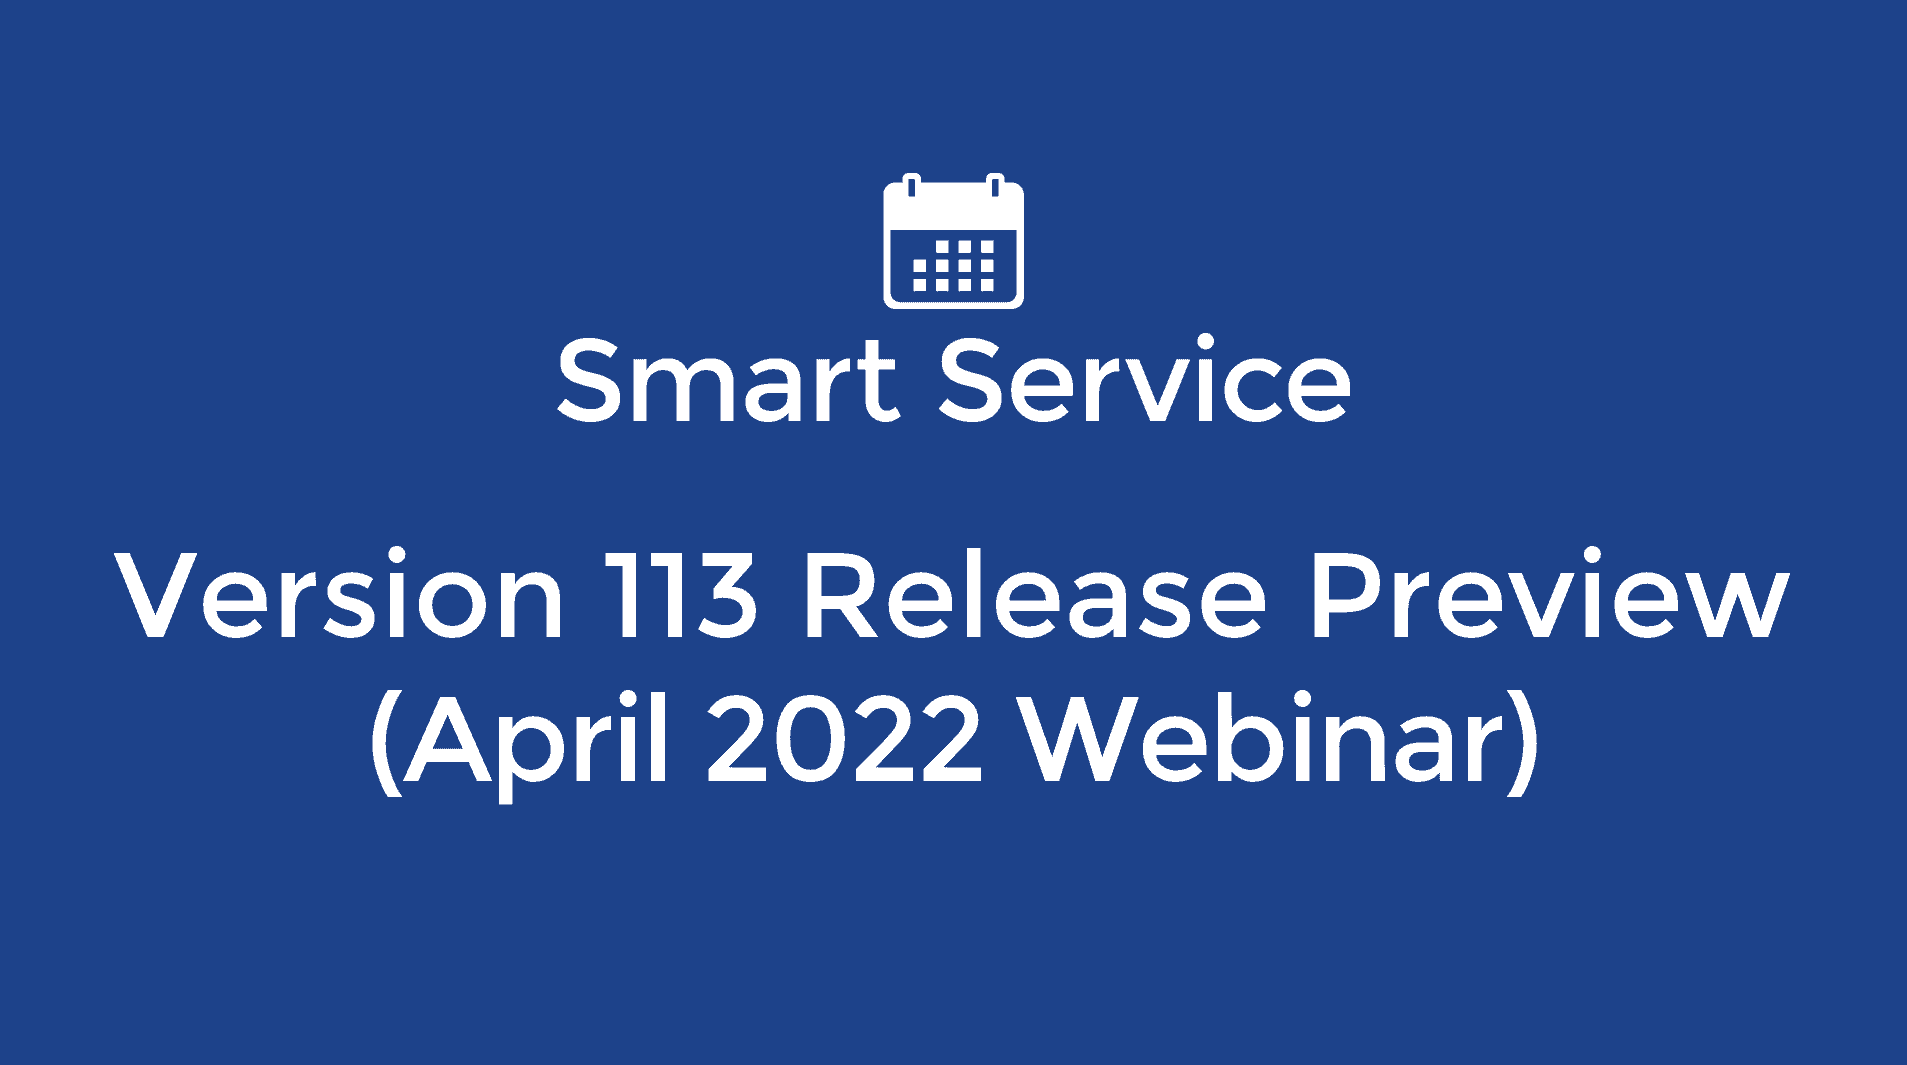 April 2022 Smart Service Webinar - 113 Release Preview